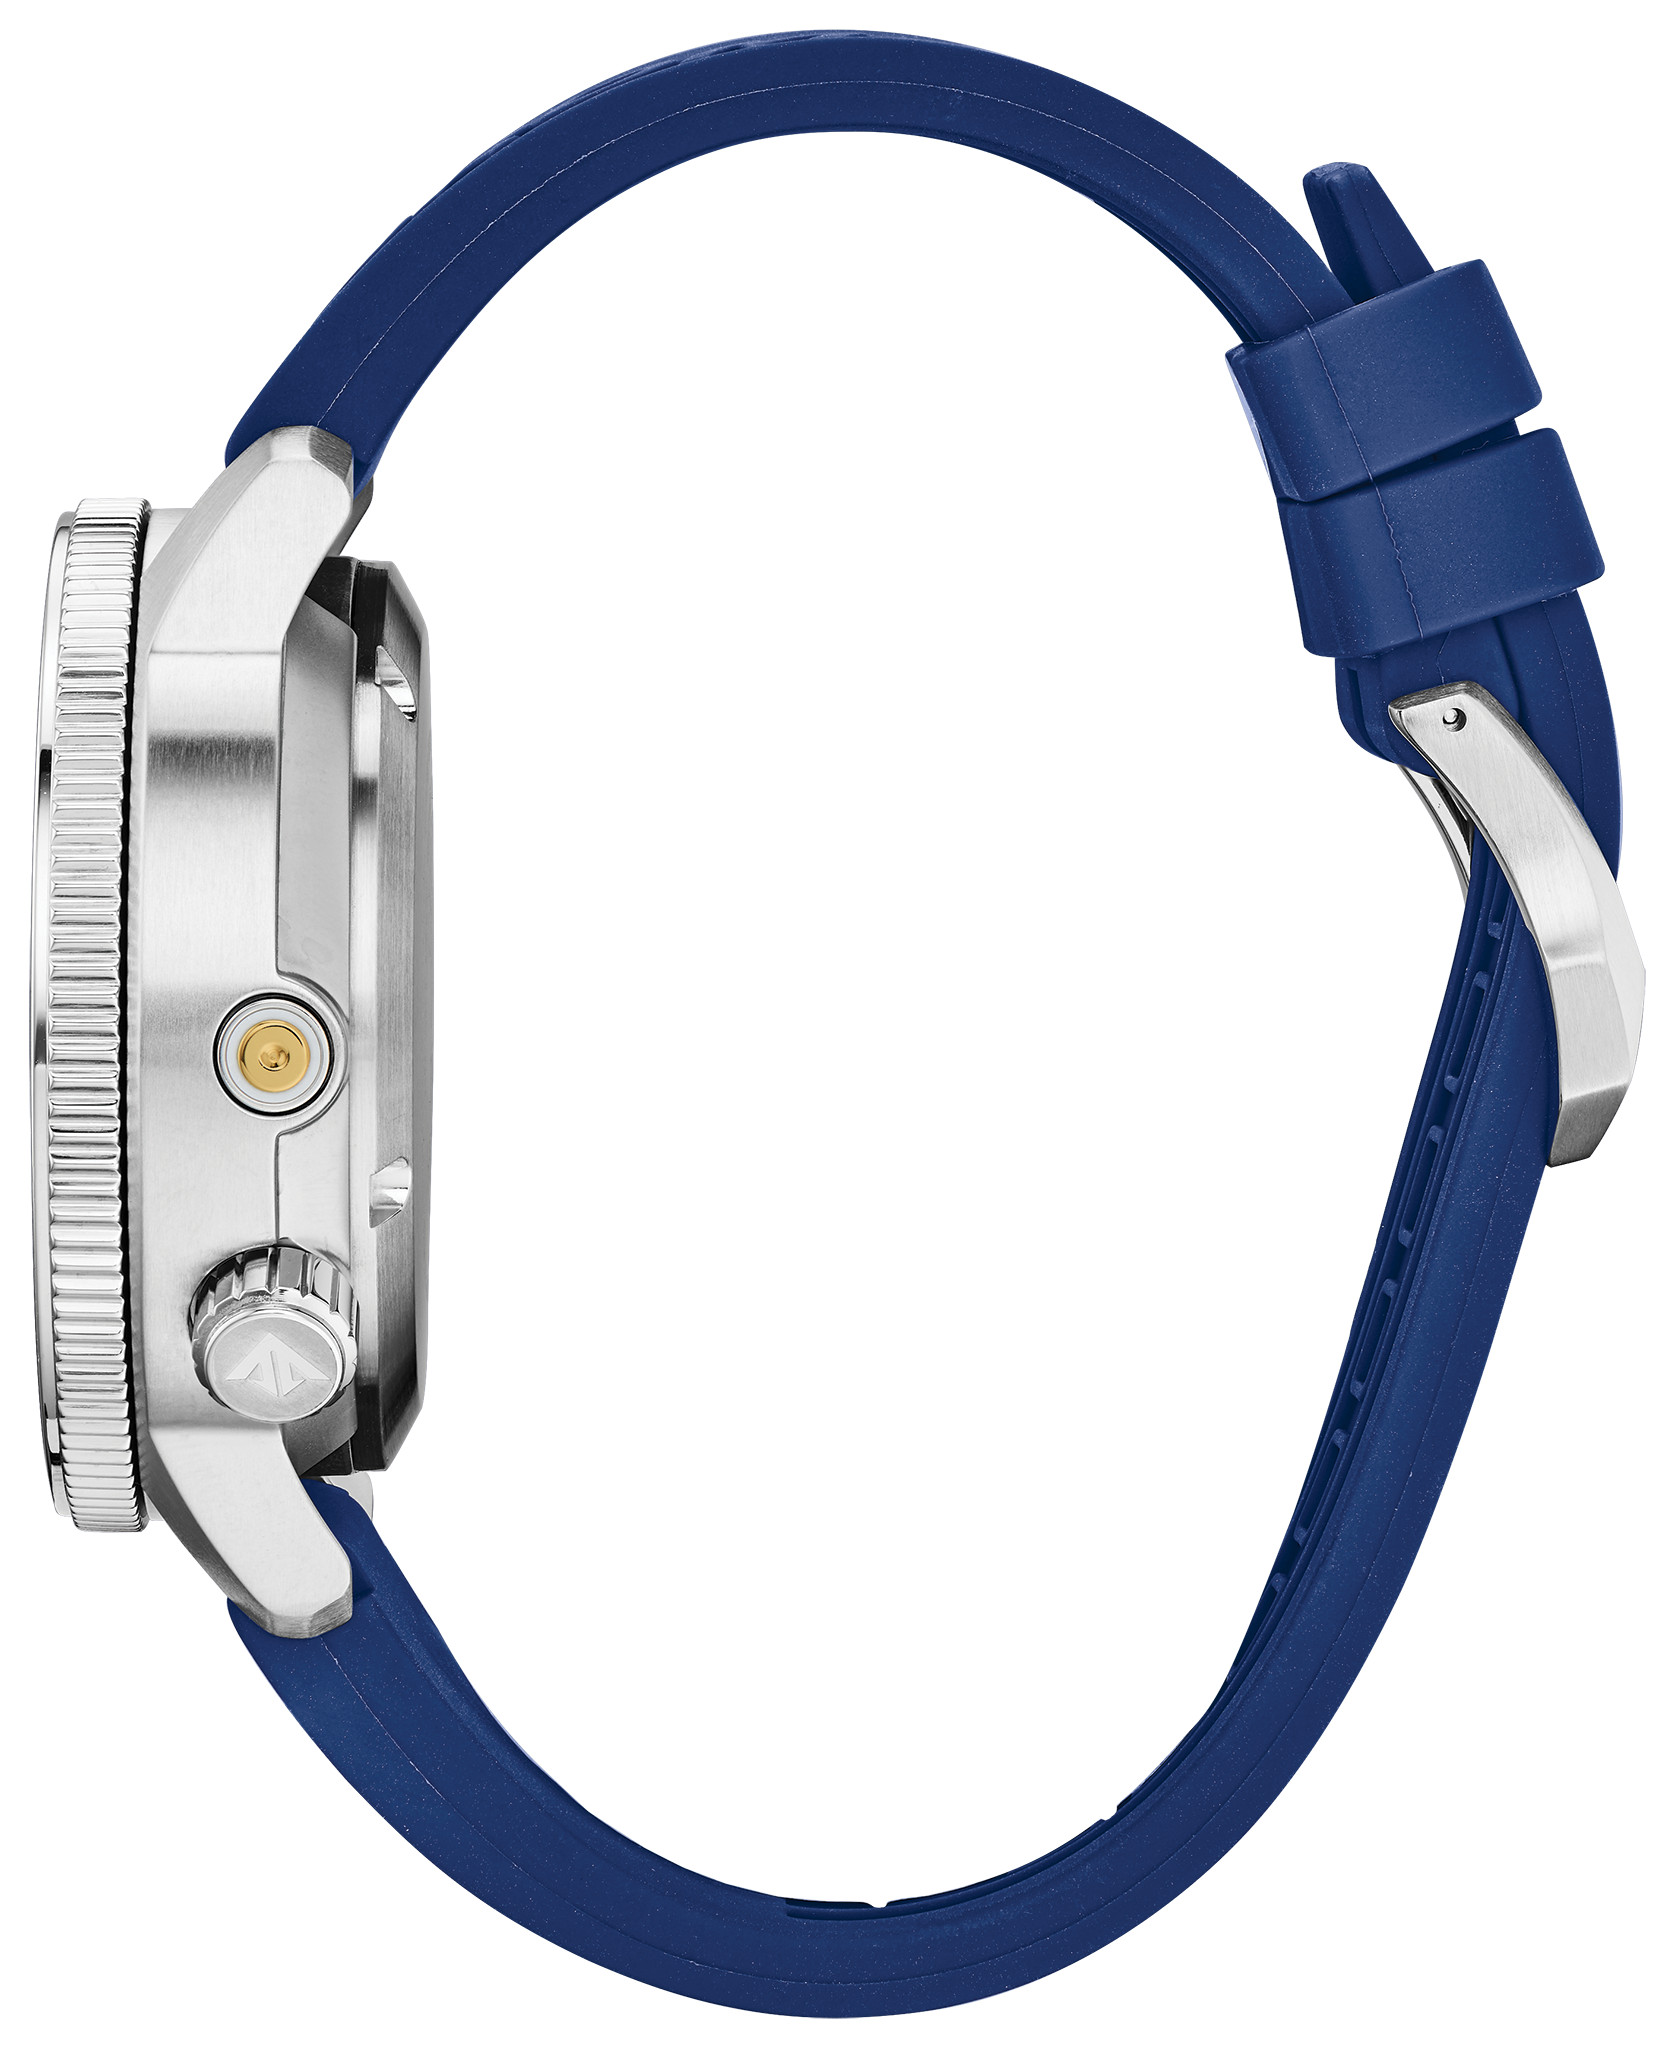 Citizen Promaster Aqualand Eco-Drive Blue Dial Watch | CITIZEN